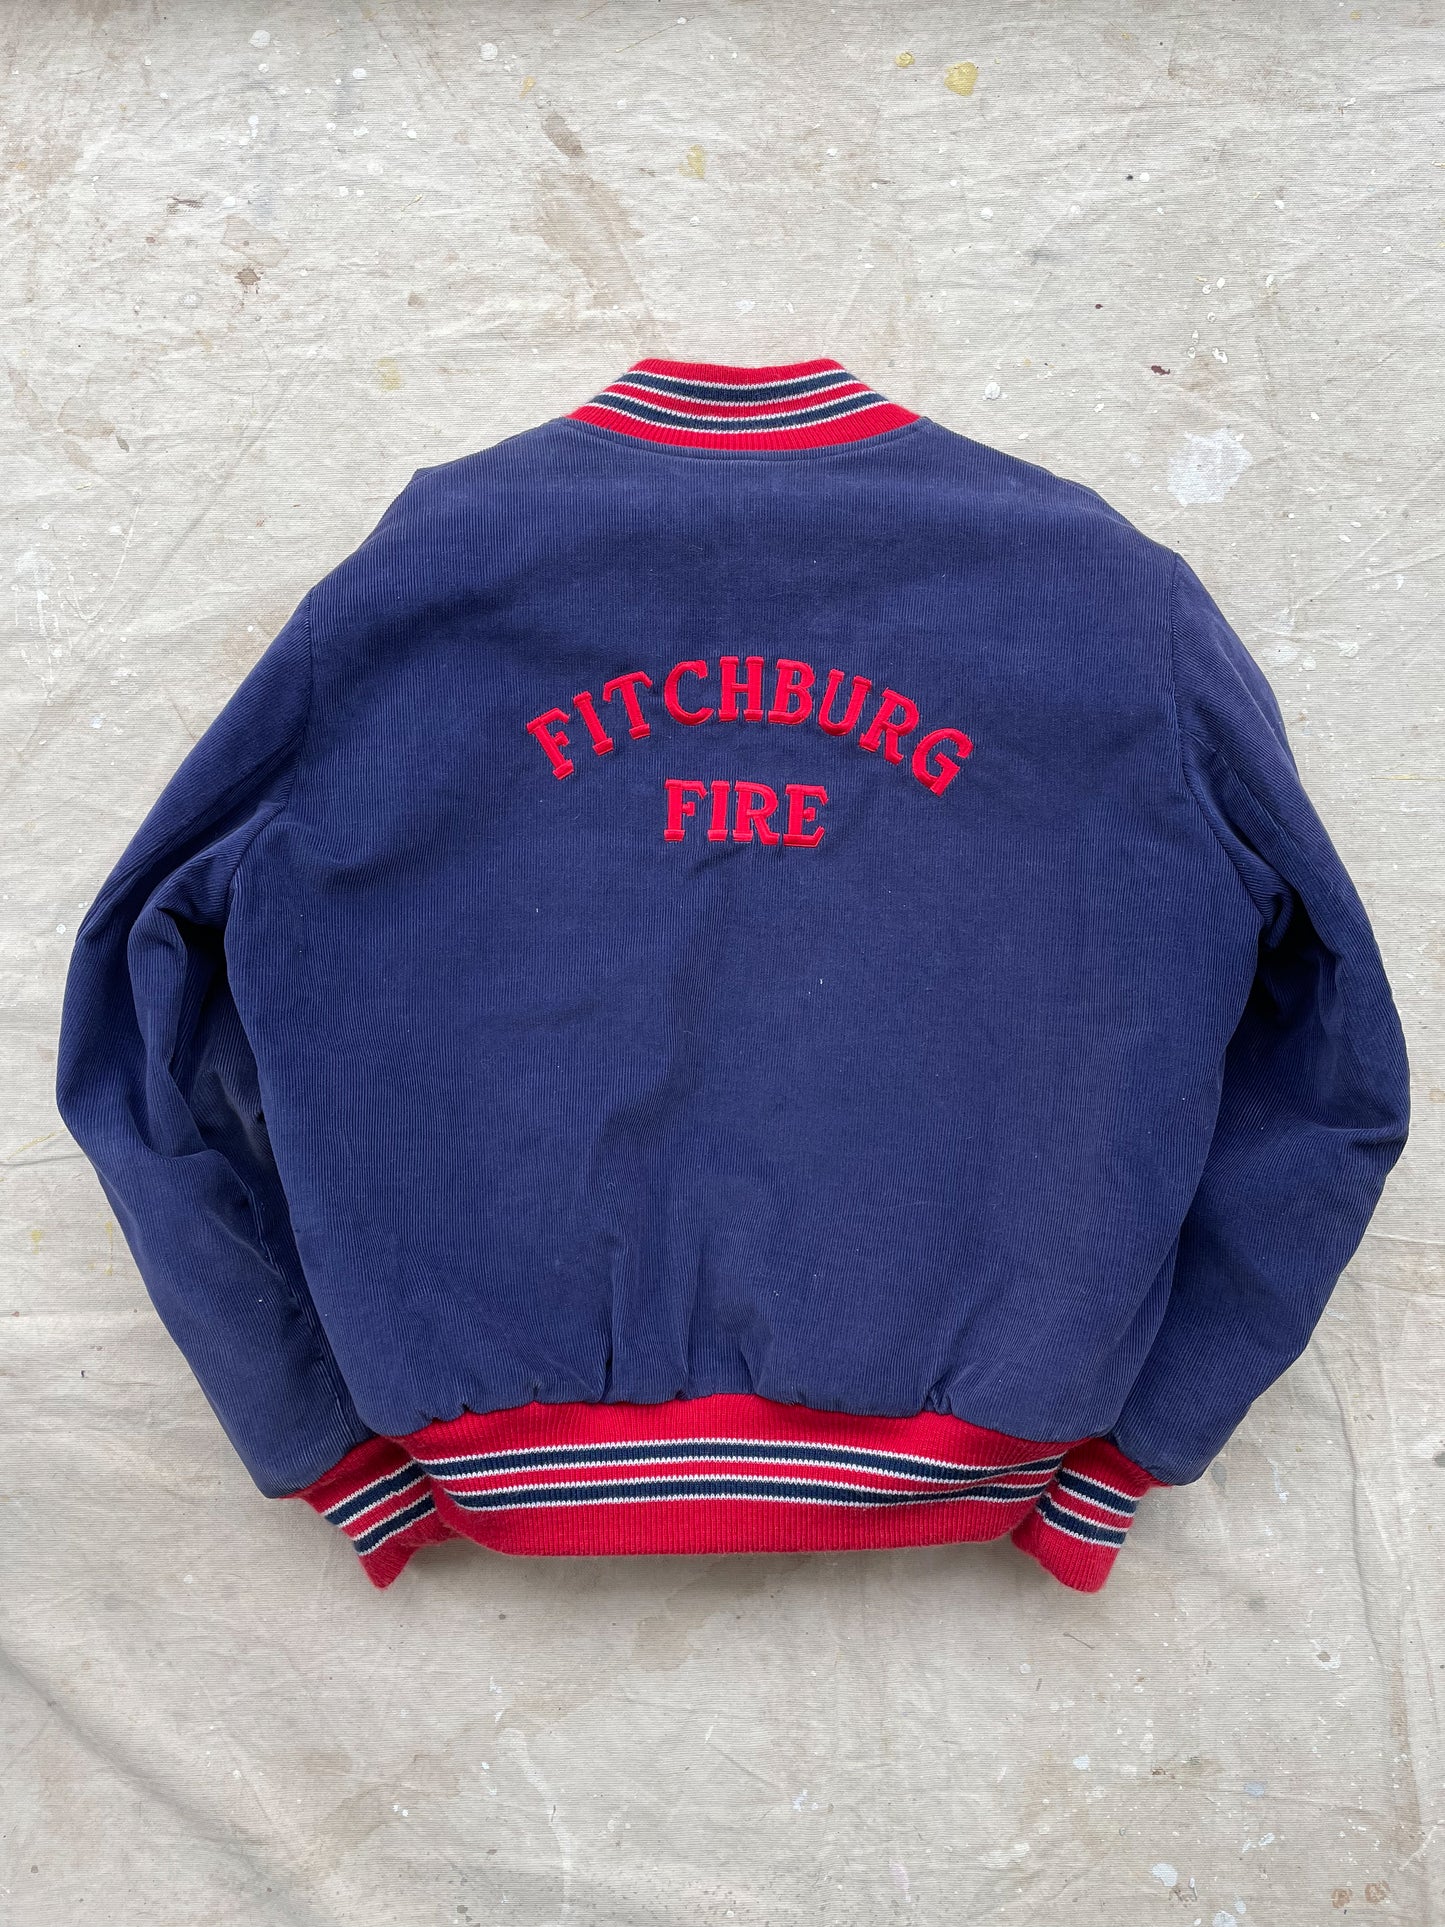 John's Fitchburg Fire Playoff Champs Jacket—[L]